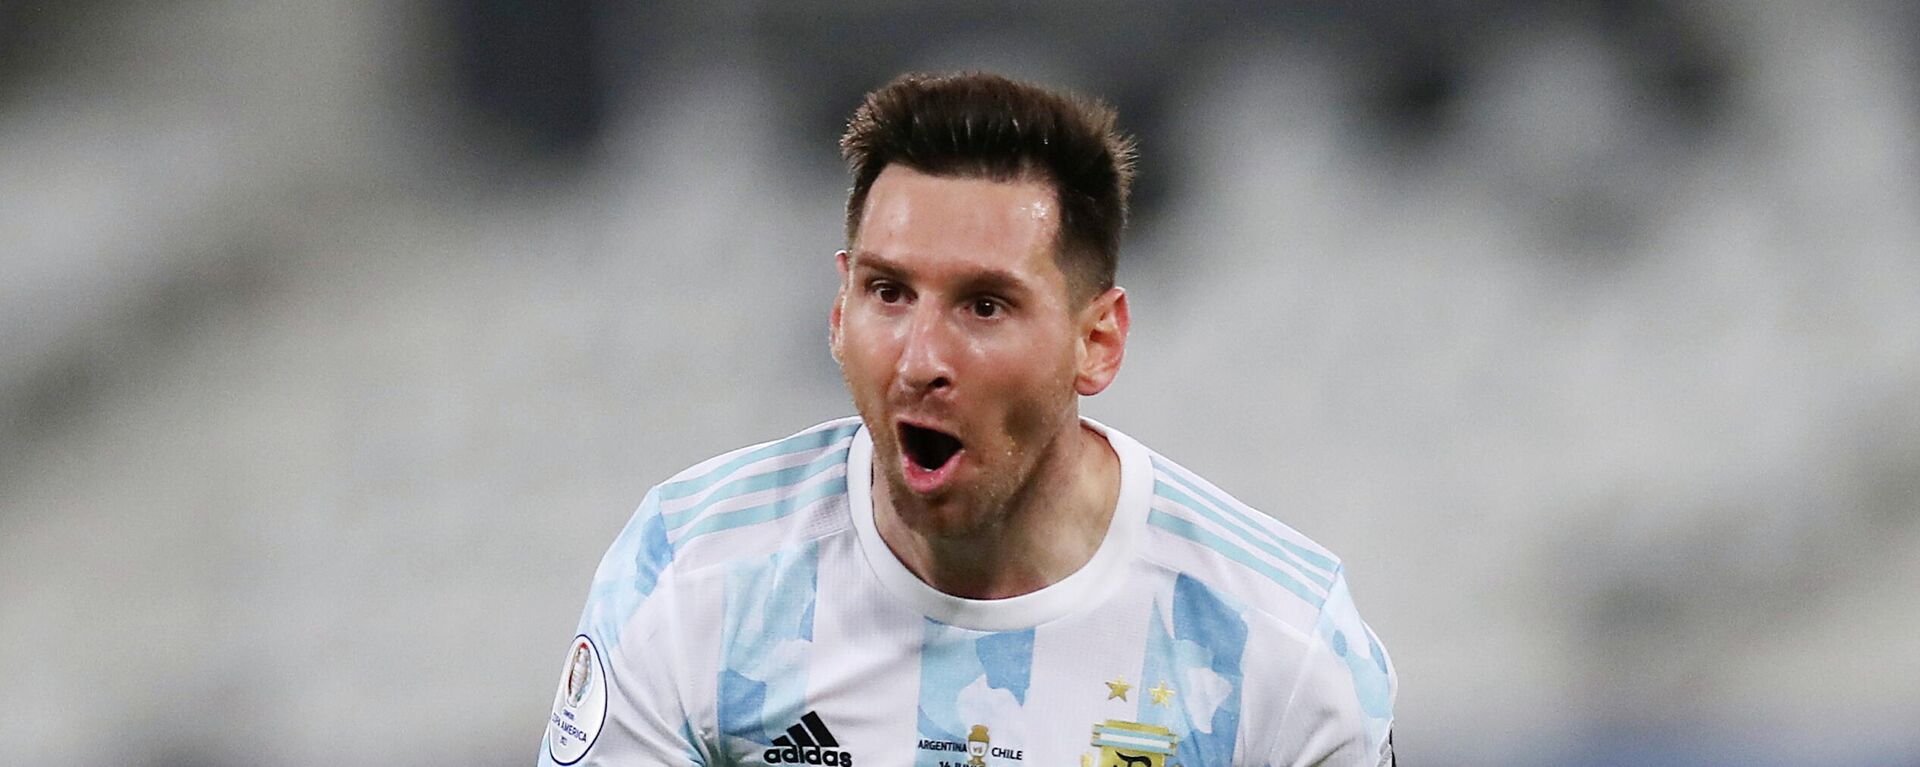 El delantero argentino Lionel Messi durante la Copa América 2021 - Sputnik Mundo, 1920, 07.07.2021